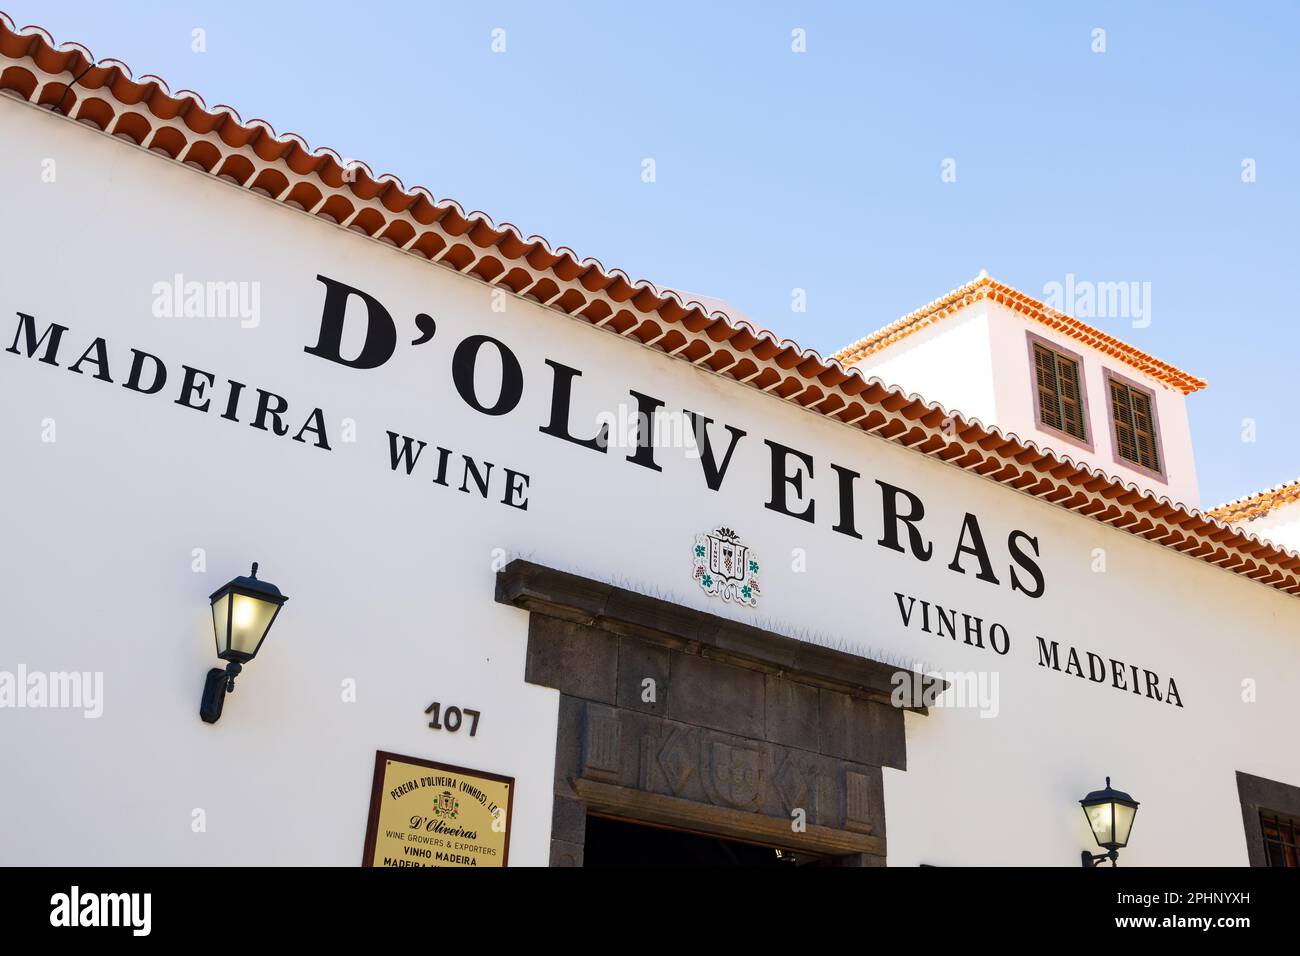 Negozio di vini di Pereira D'Oliveira Madeira, Rua dos Ferreiros, Funchal, Madeira, Portogallo Foto Stock